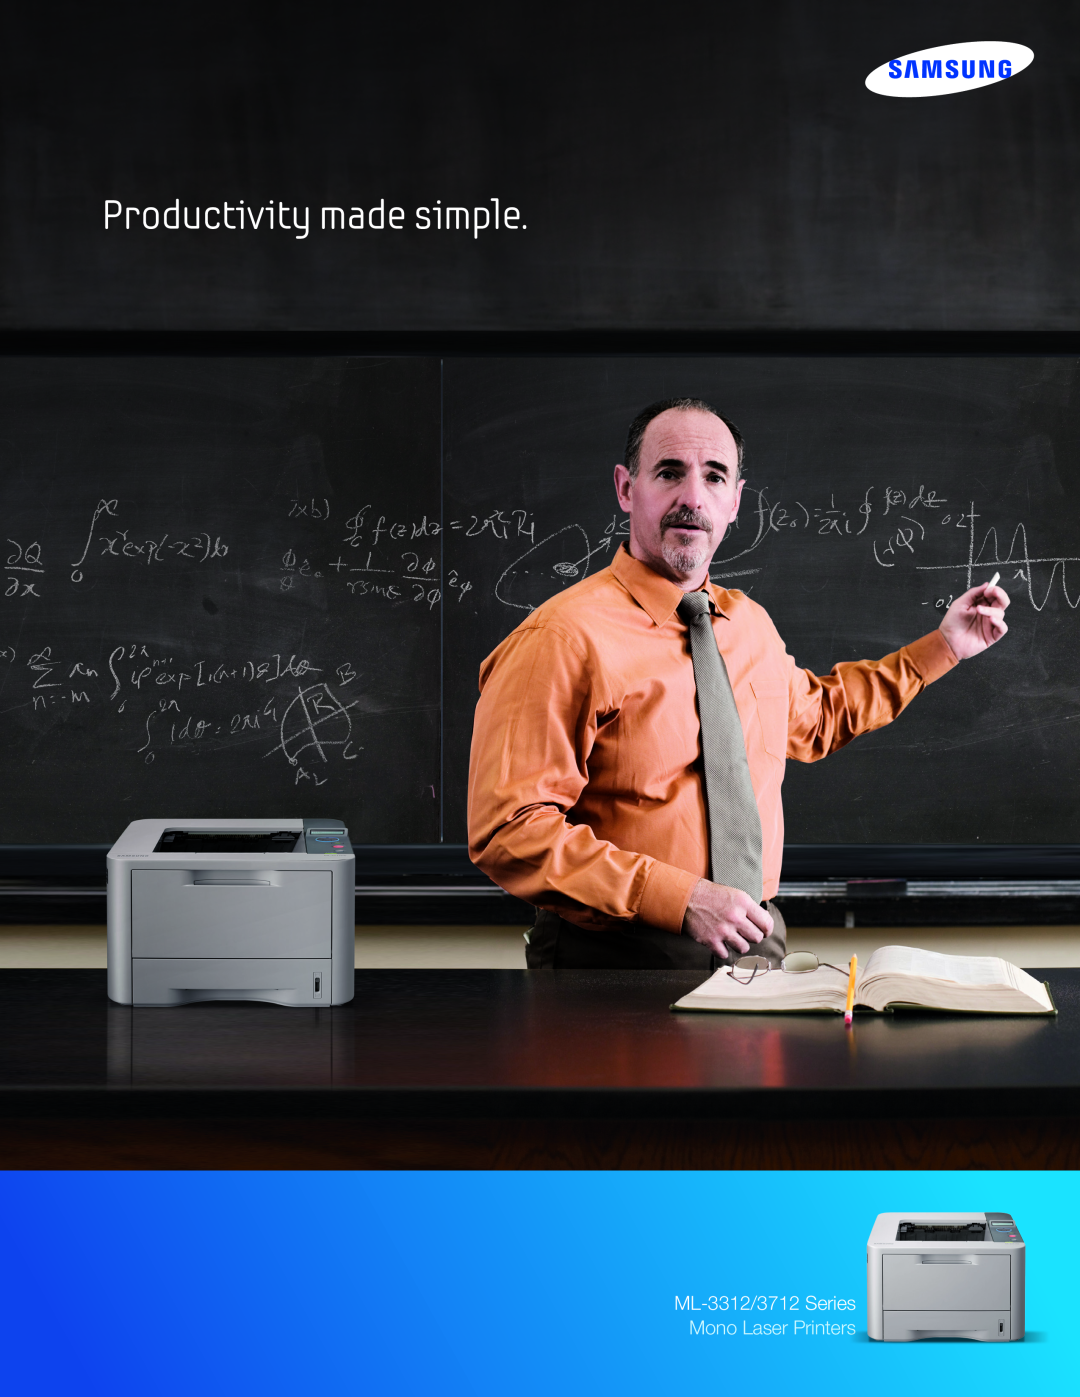 Samsung ML-3712 manual Productivity made simple, ML-3312/3712 Series, Mono Laser Printers 